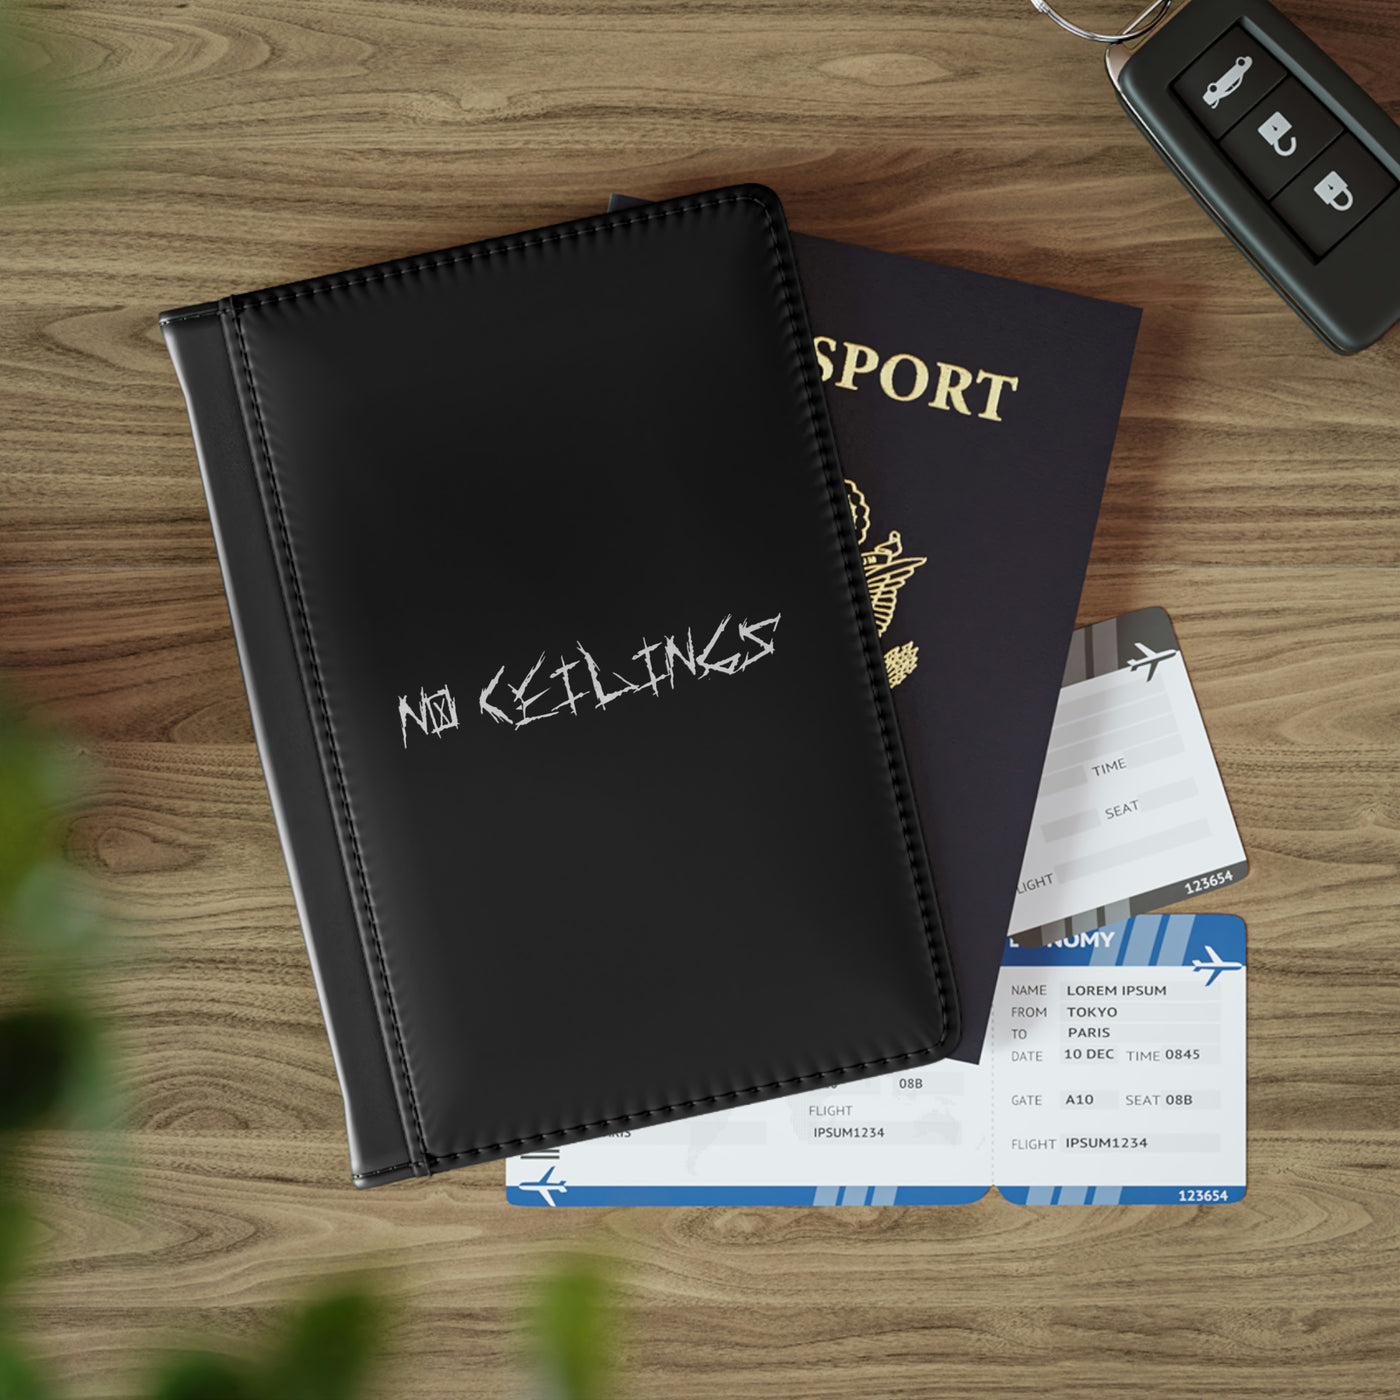 Noceilings Passport Cover - NoCeilingsClothing